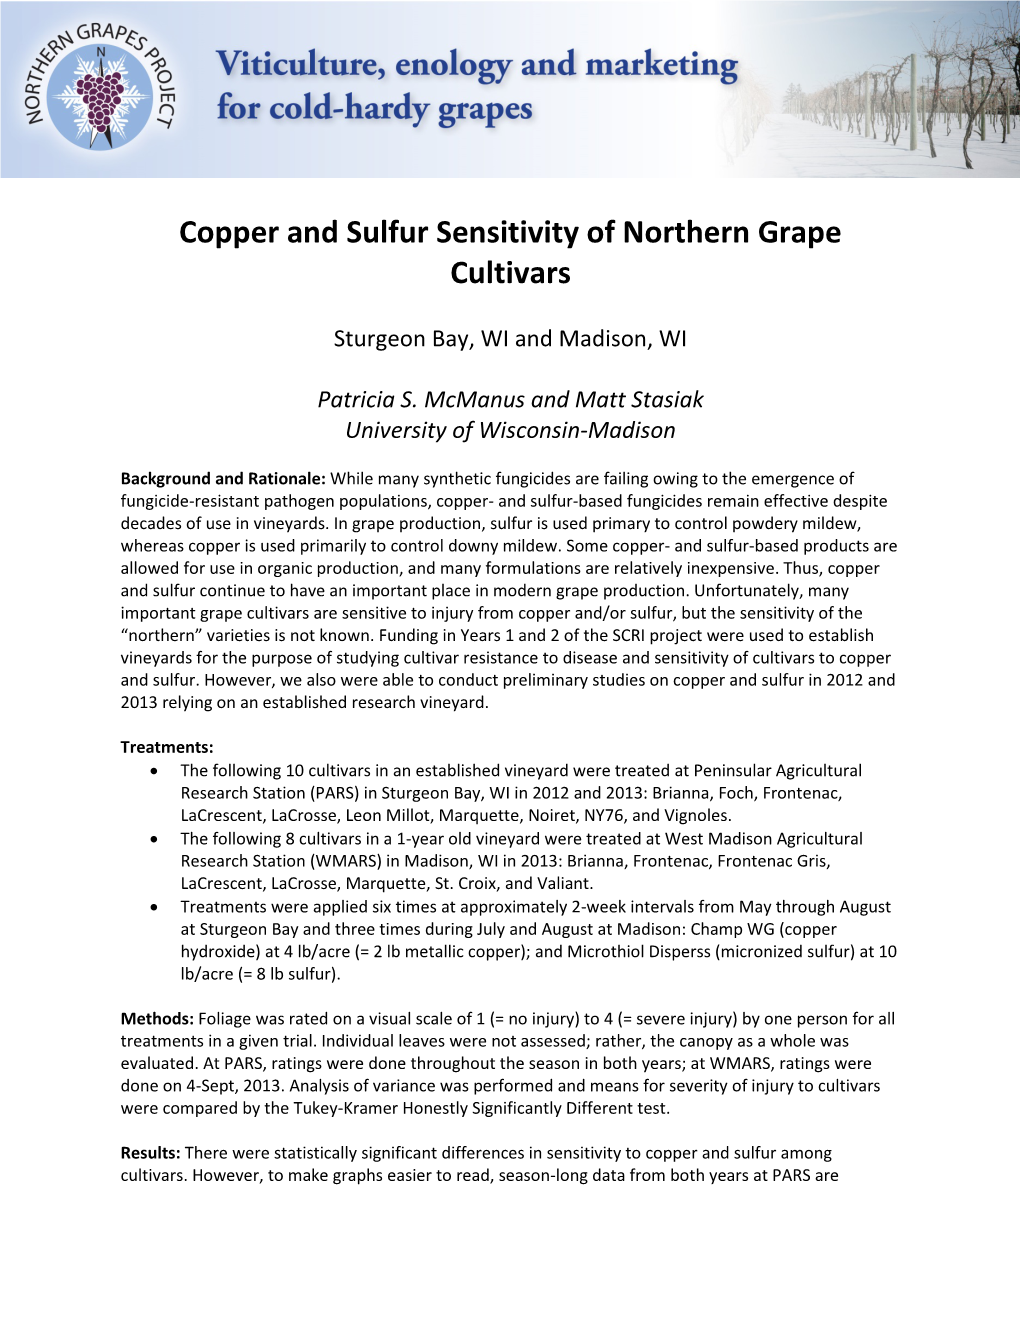 Copper and Sulfur Sensitivity of Northern Grape Cultivars